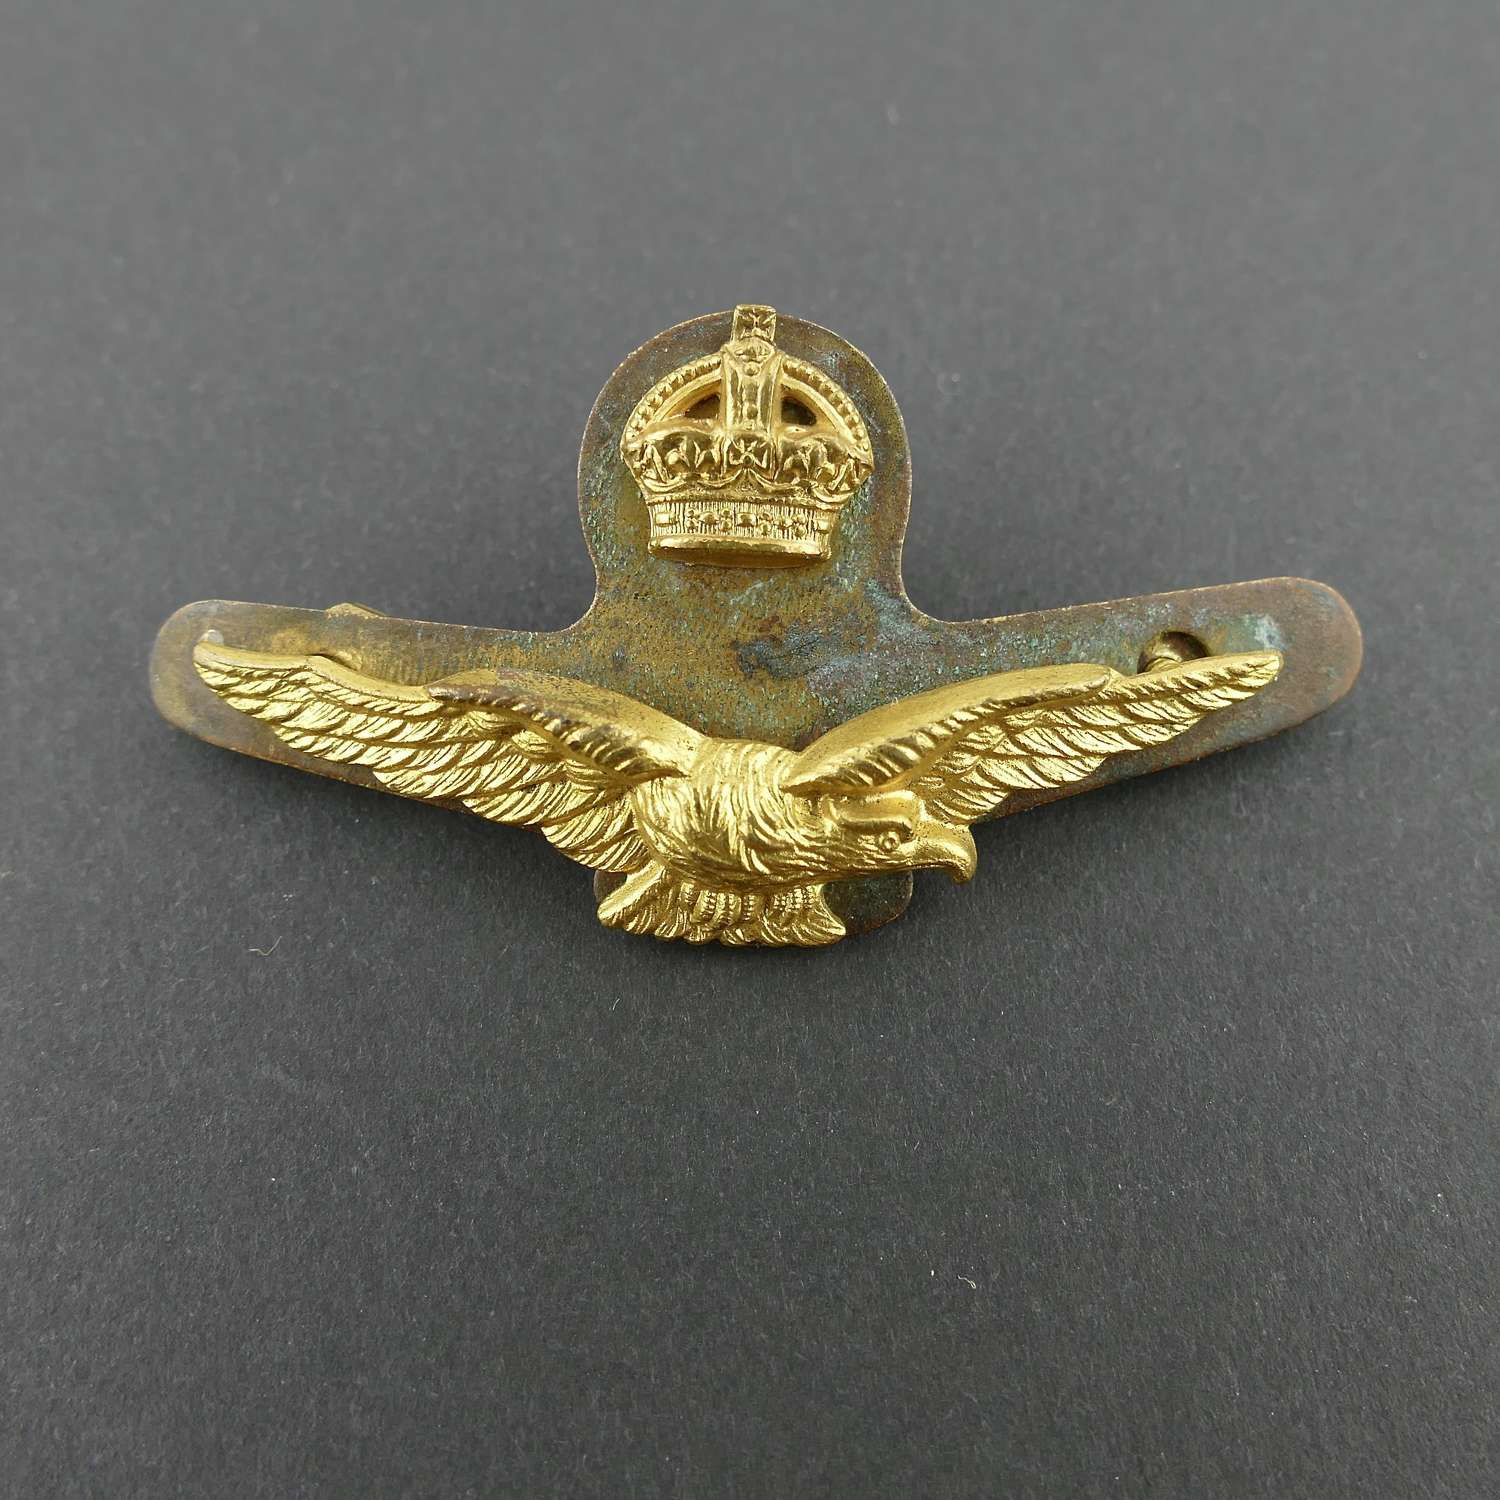 RAF 'officer rank' field service cap badge